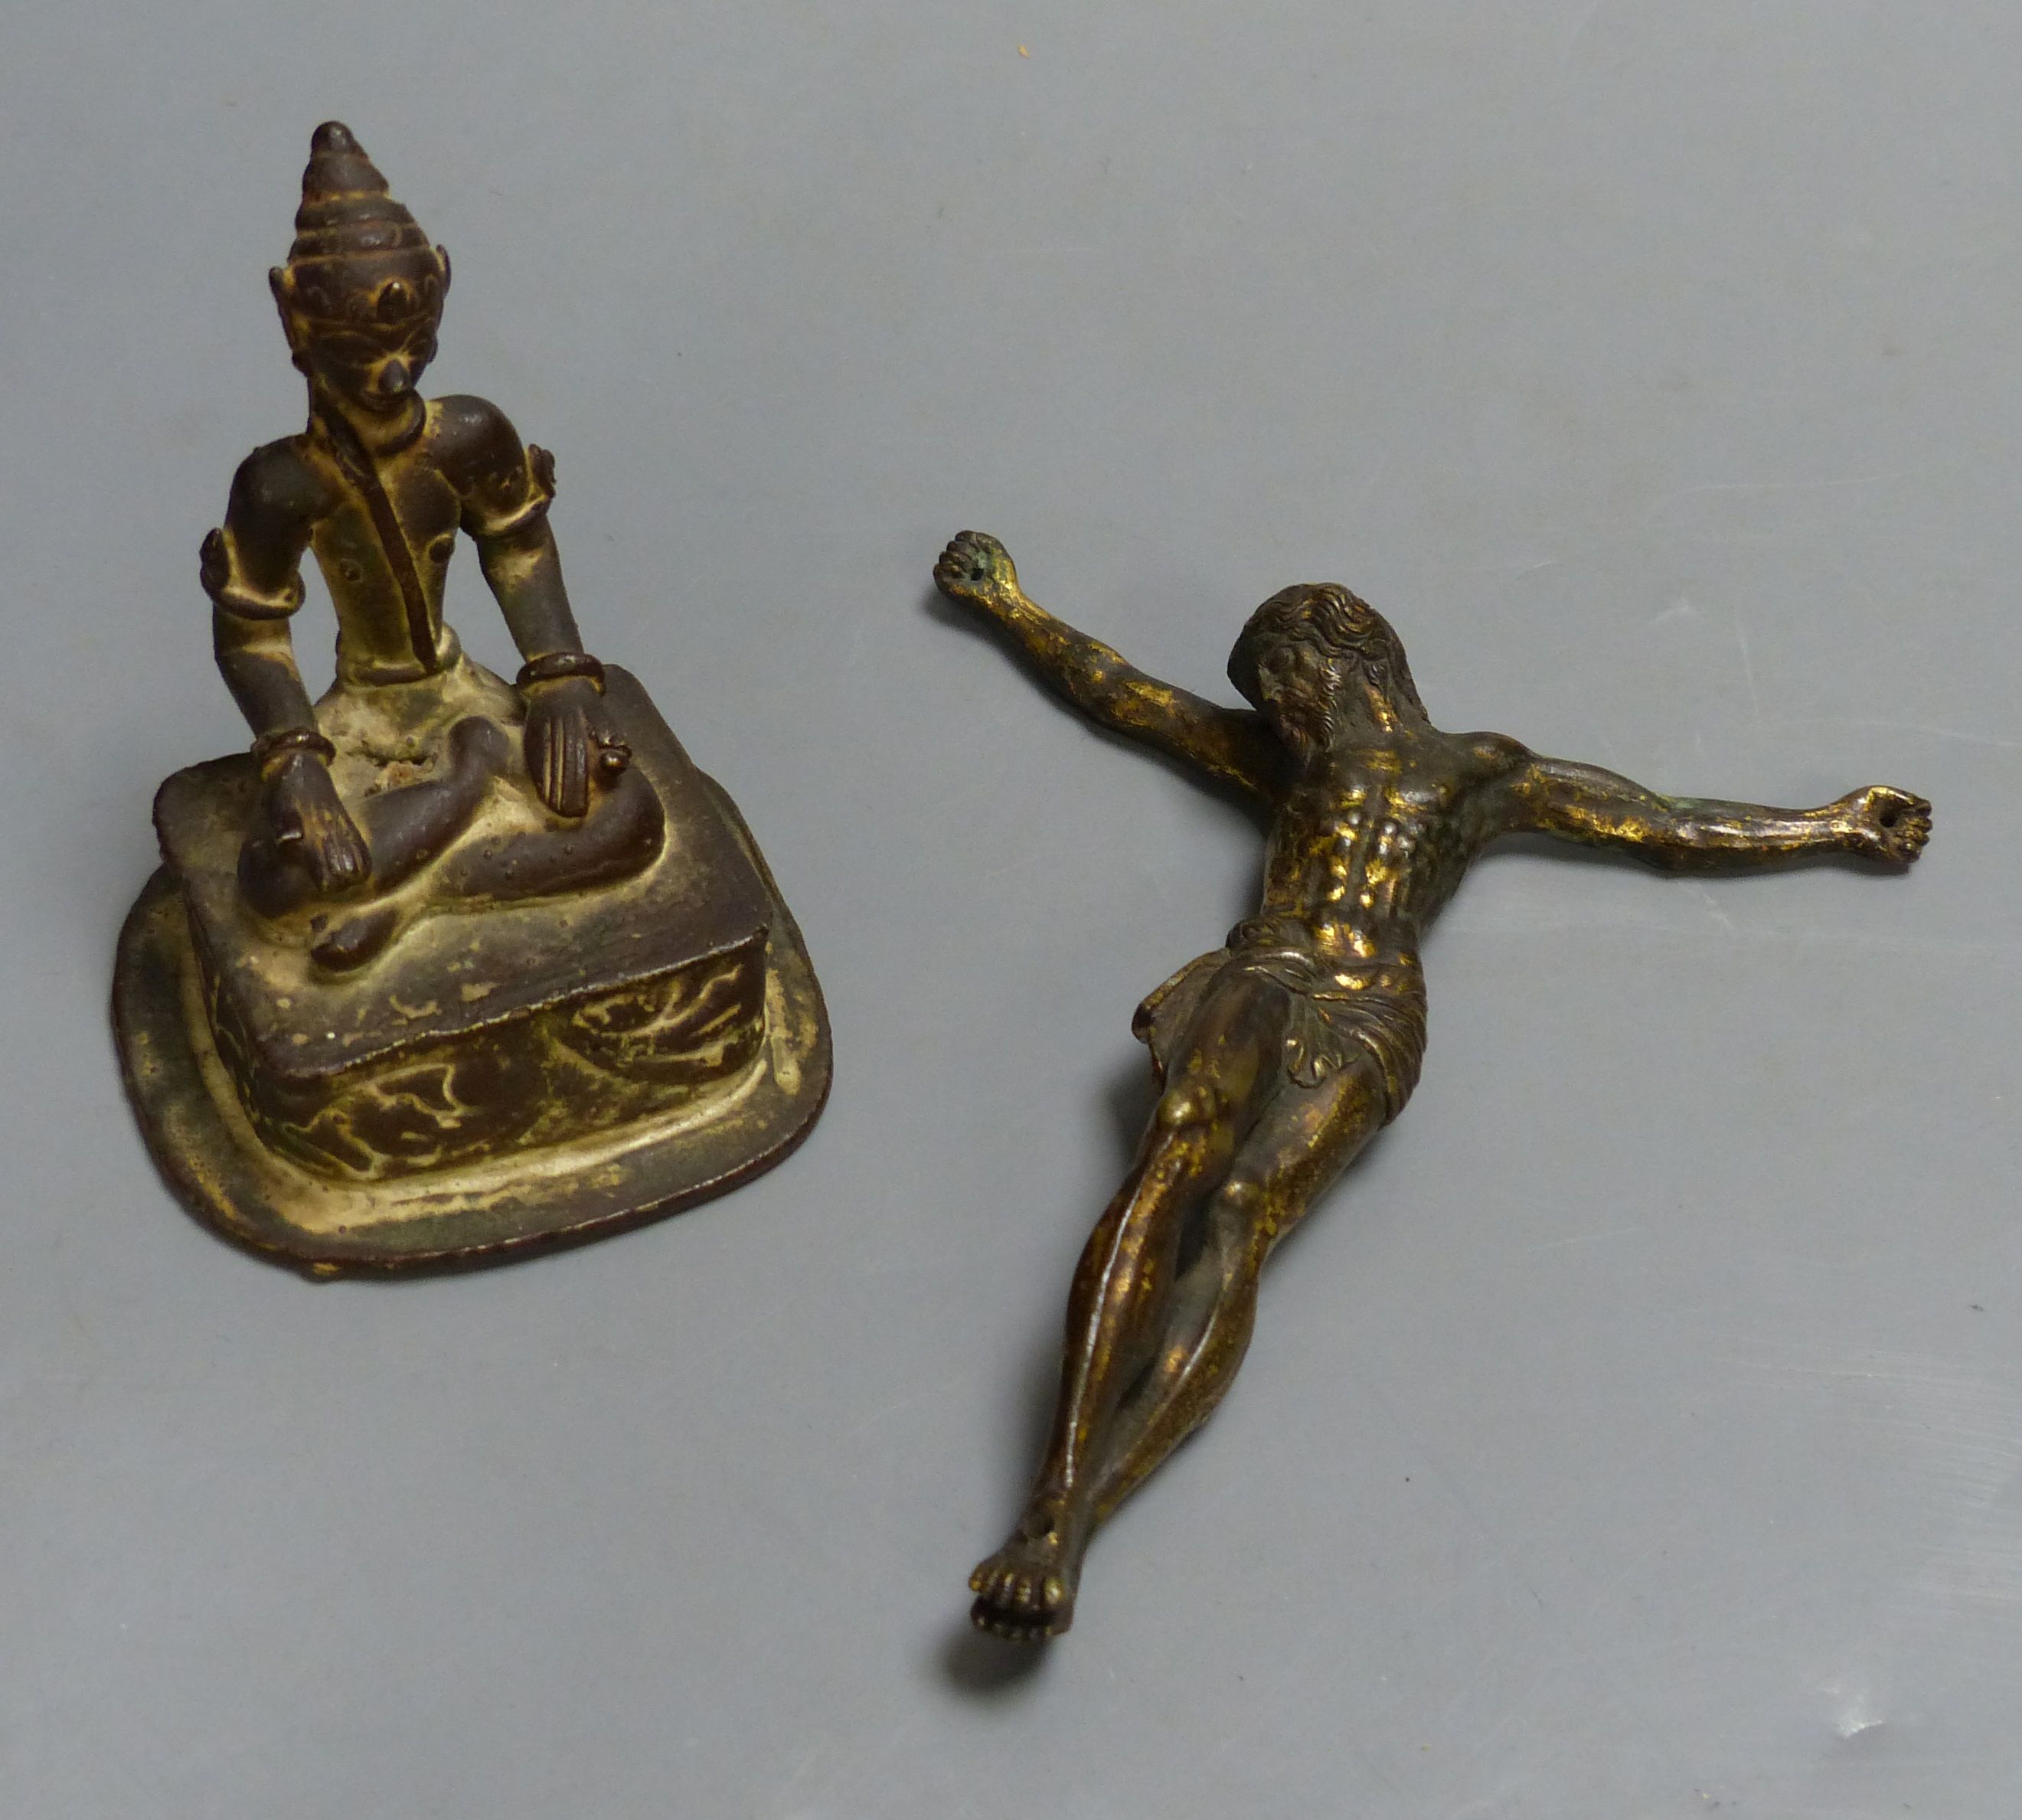 An Indian Buddhist figure and a gilt bronze Corpus Christi, largest 13cm